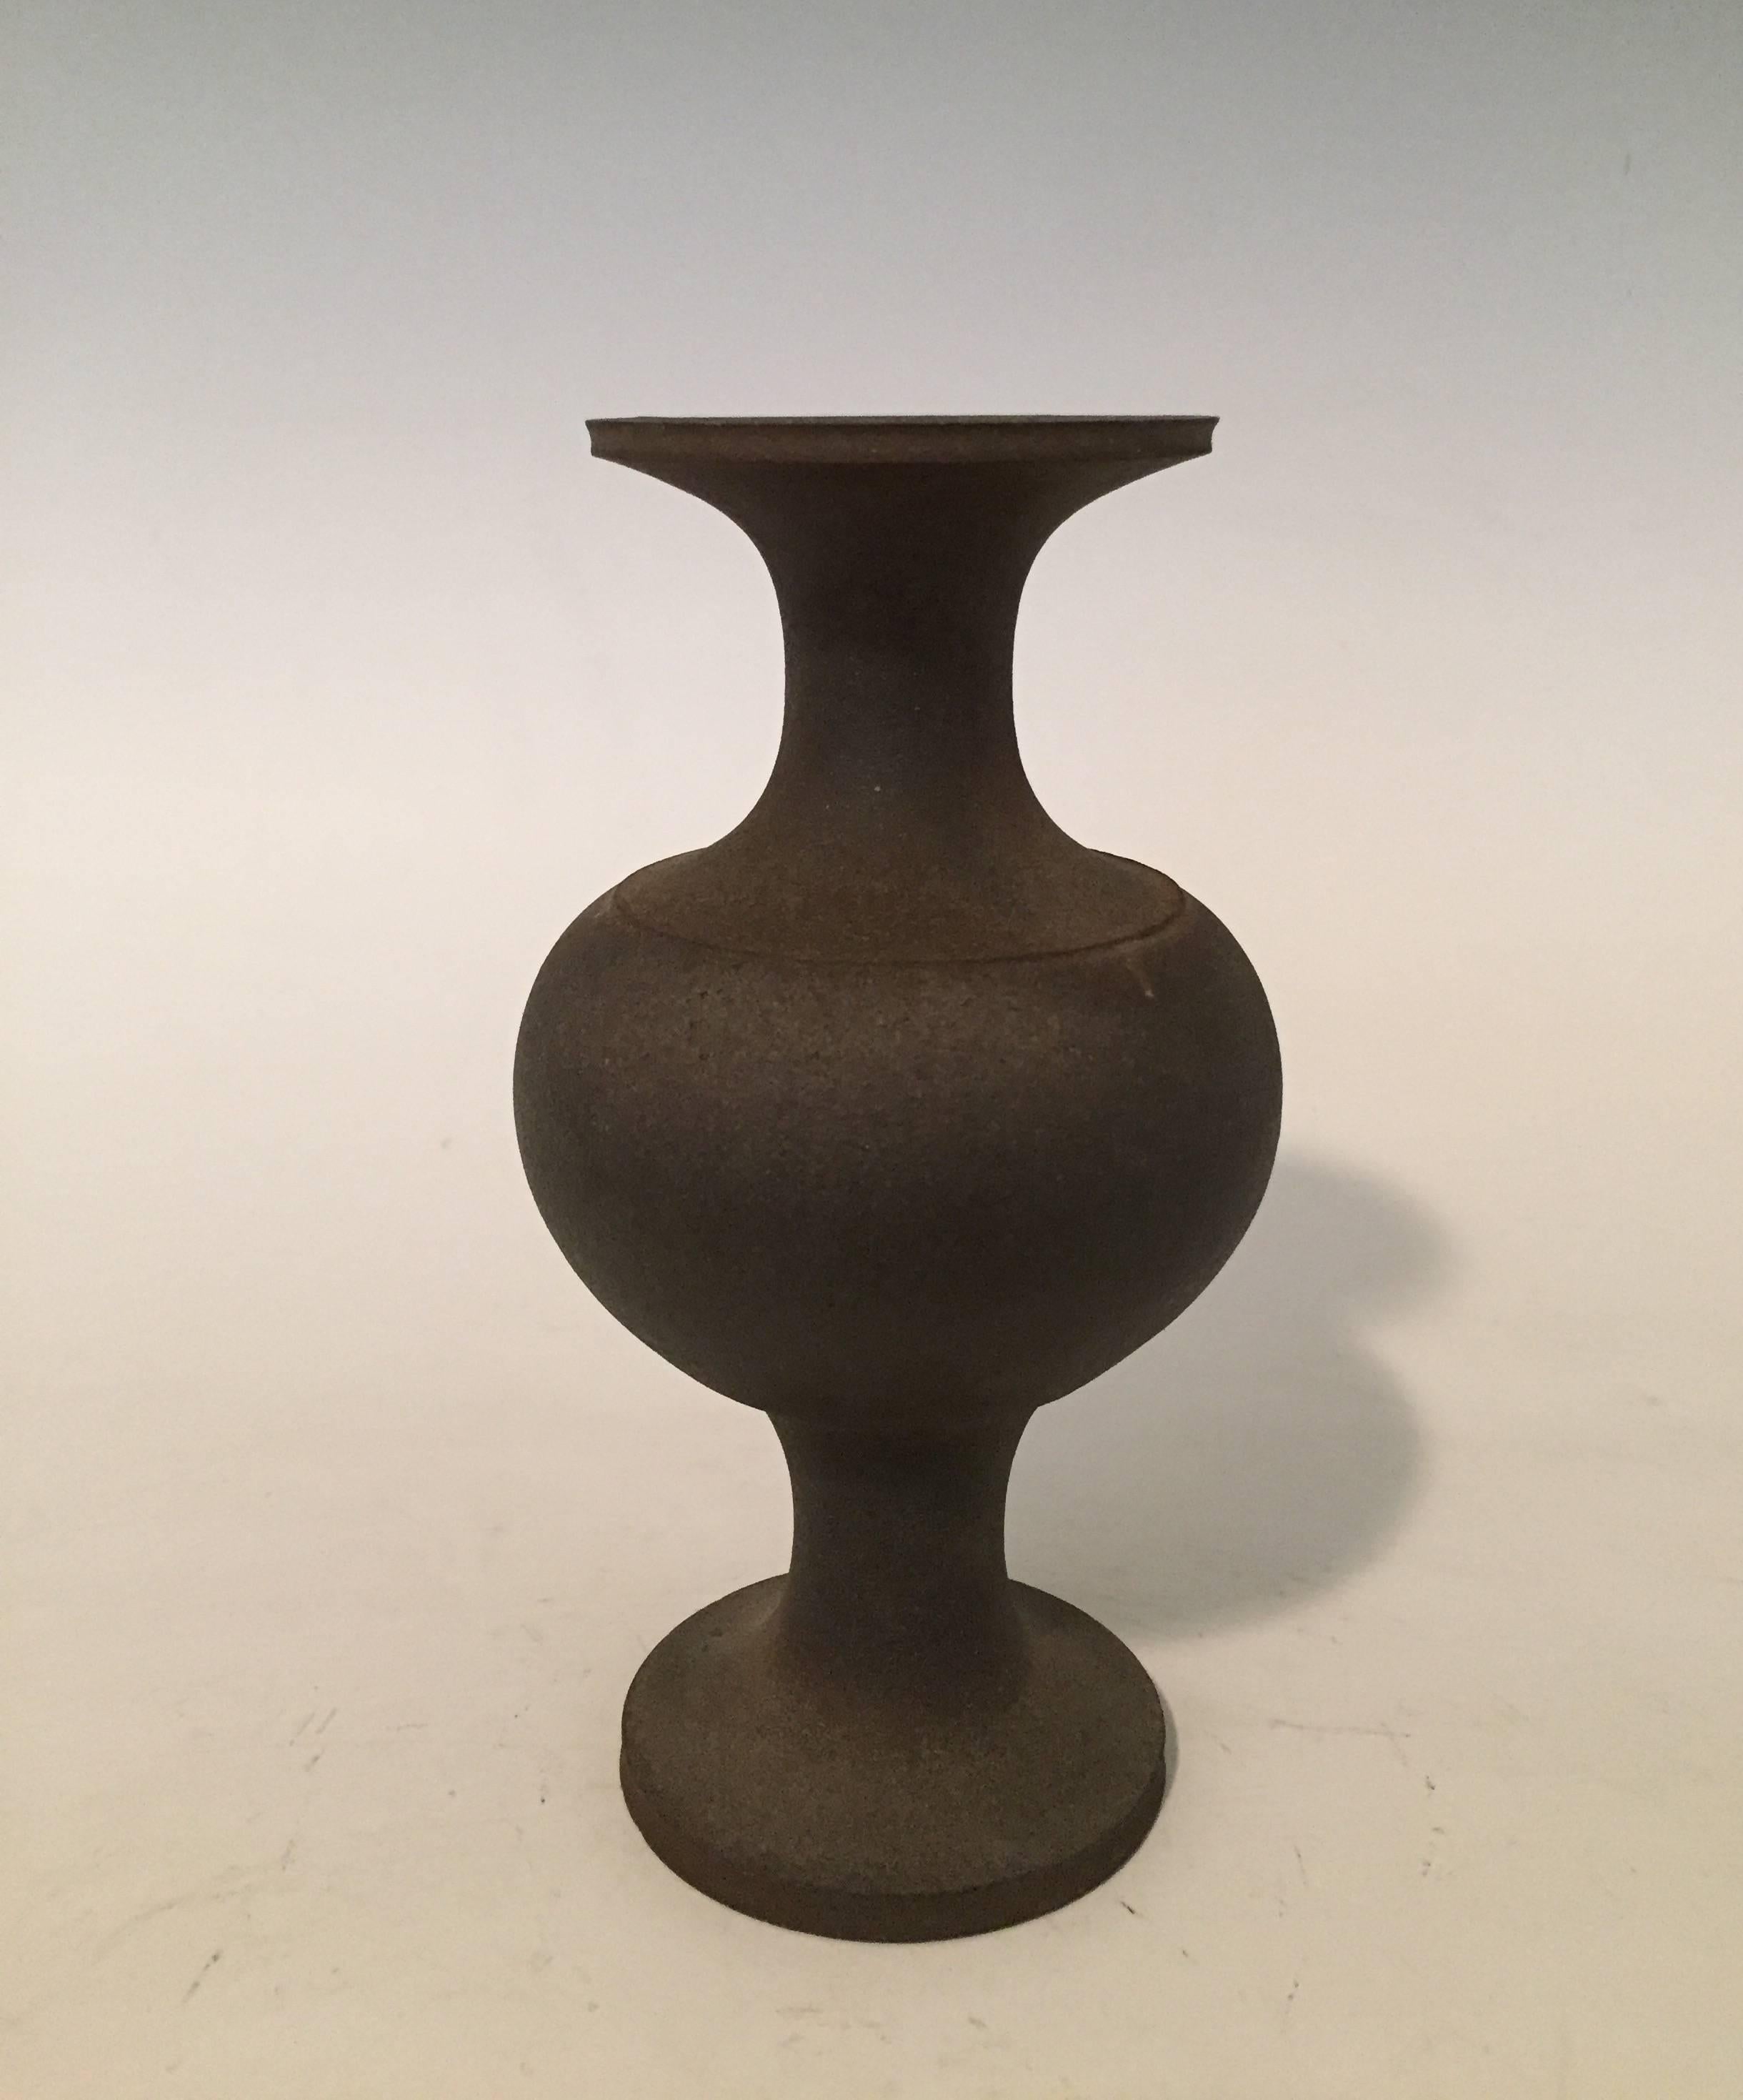 Chinese Contemporary Stoneware Vase by Koji Toda